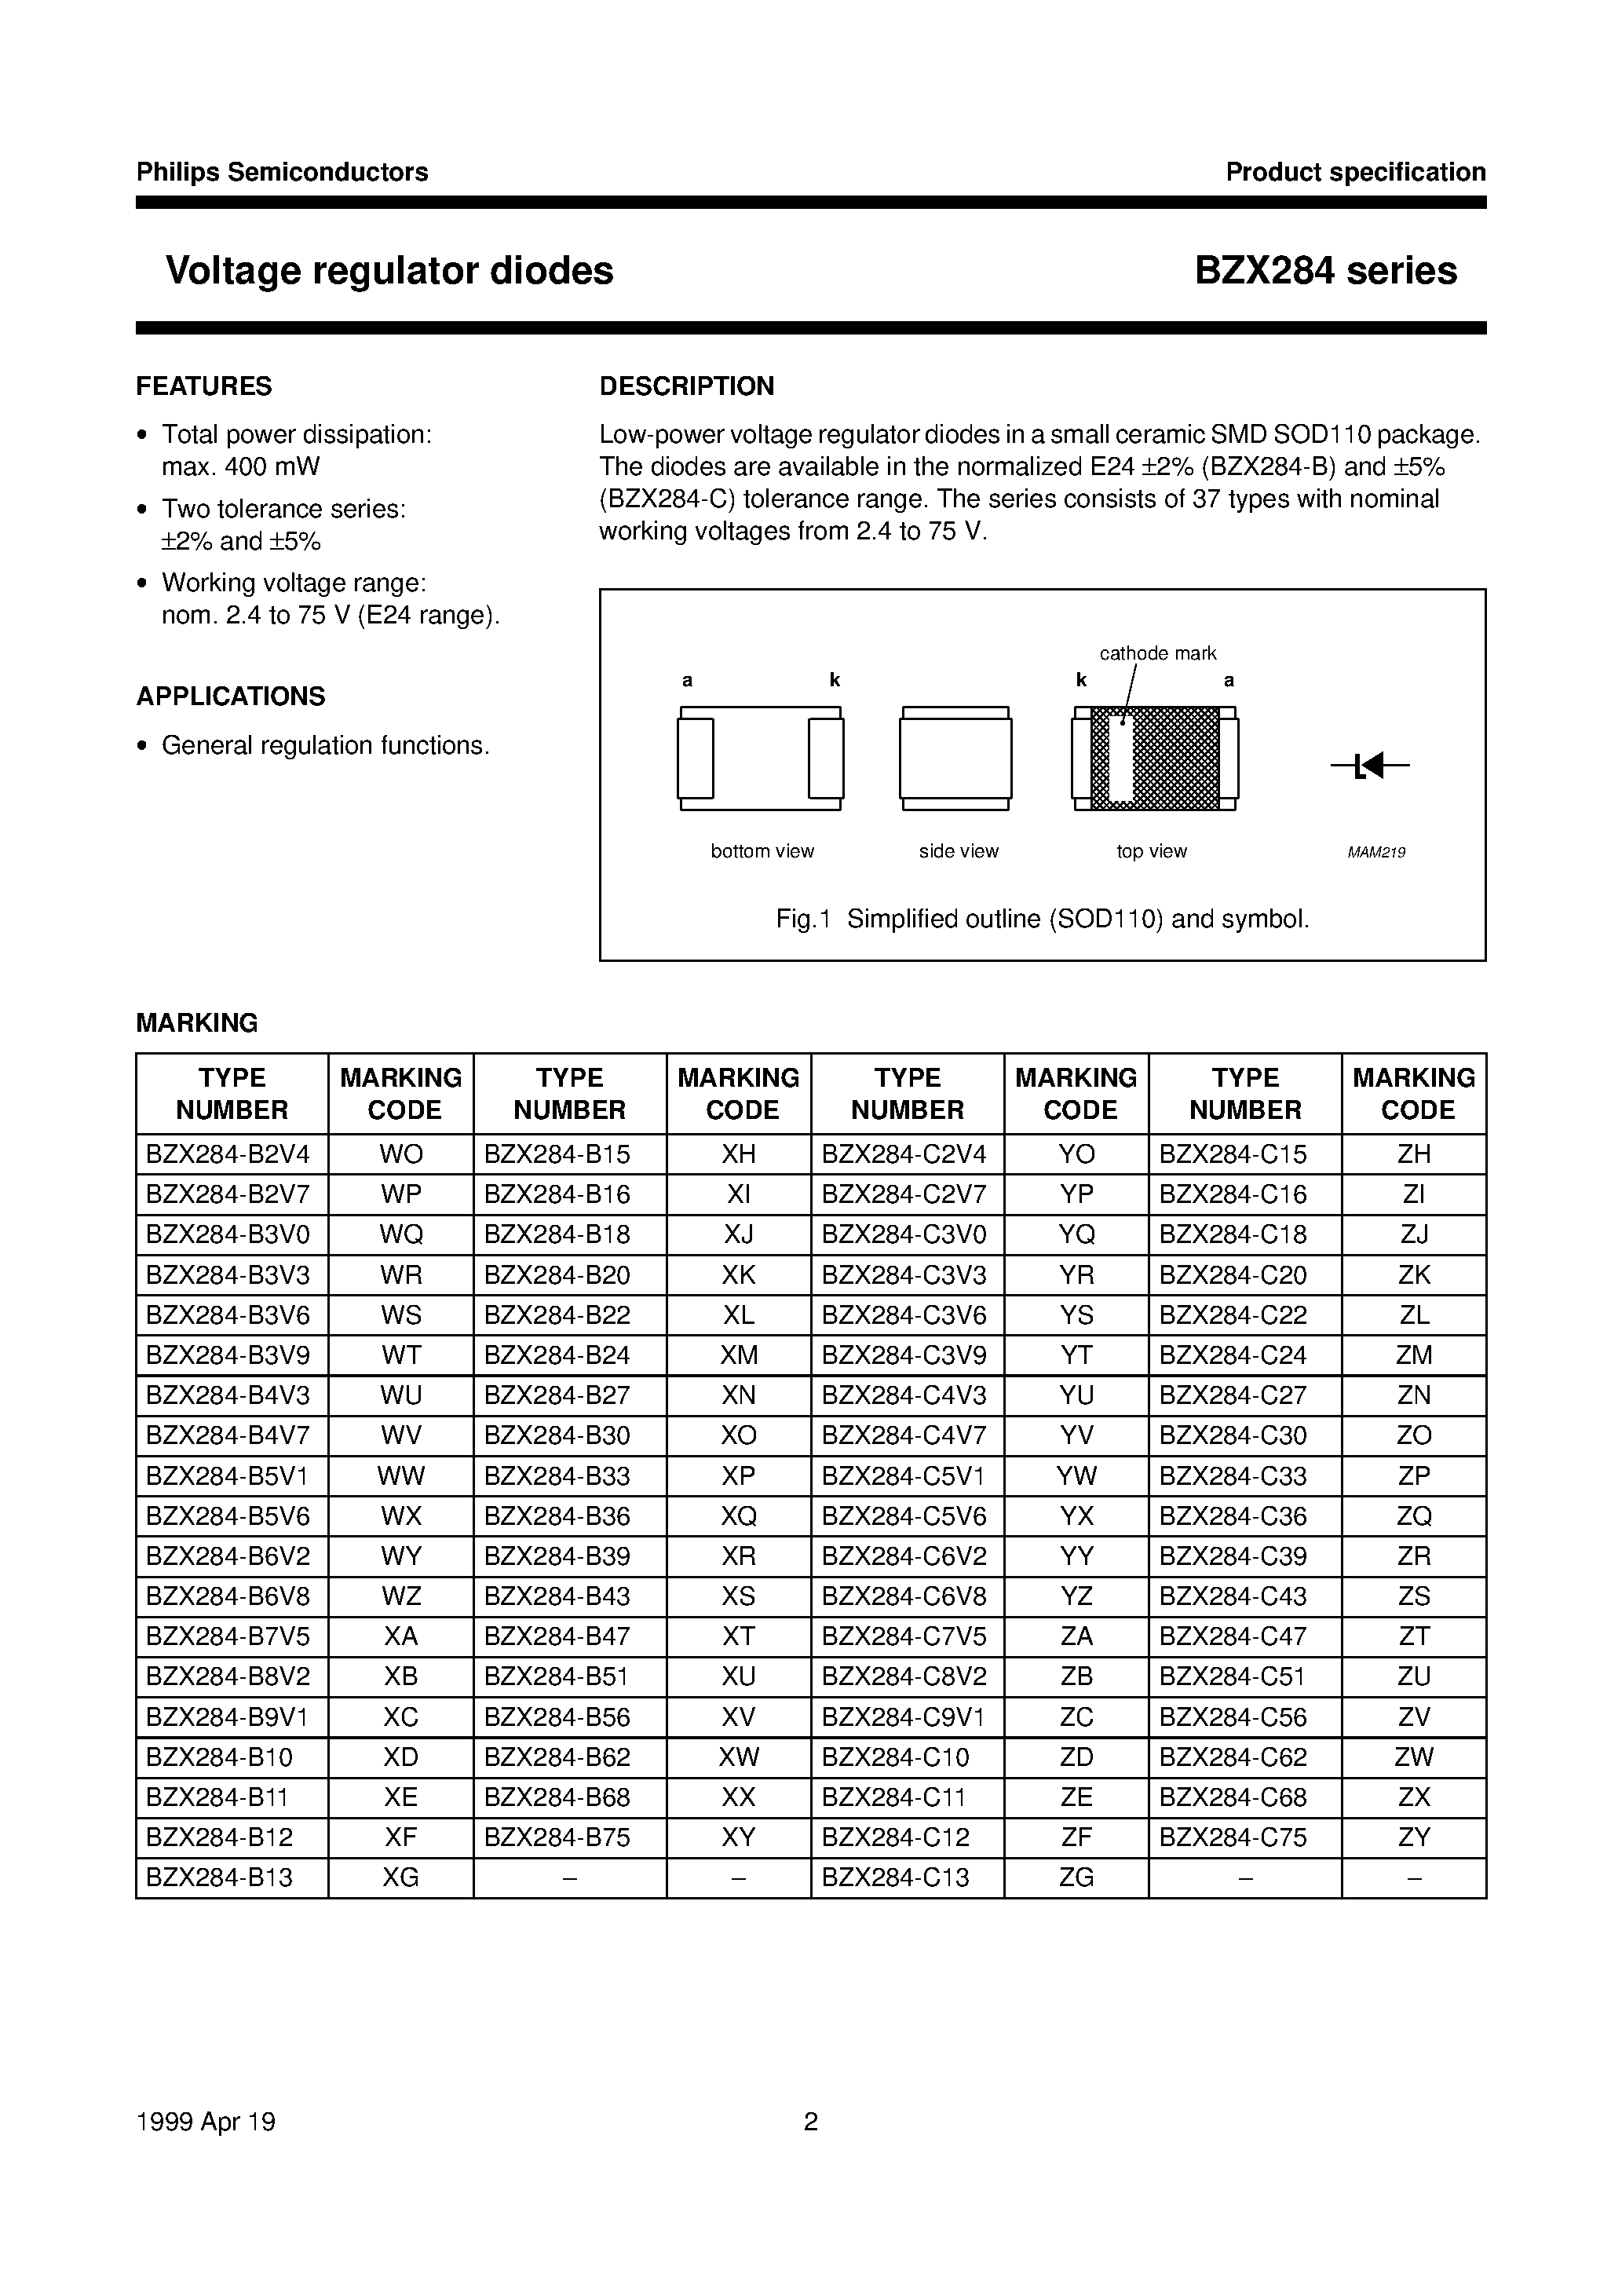 Datasheet BZX284-B5V1 - Voltage regulator diodes page 2